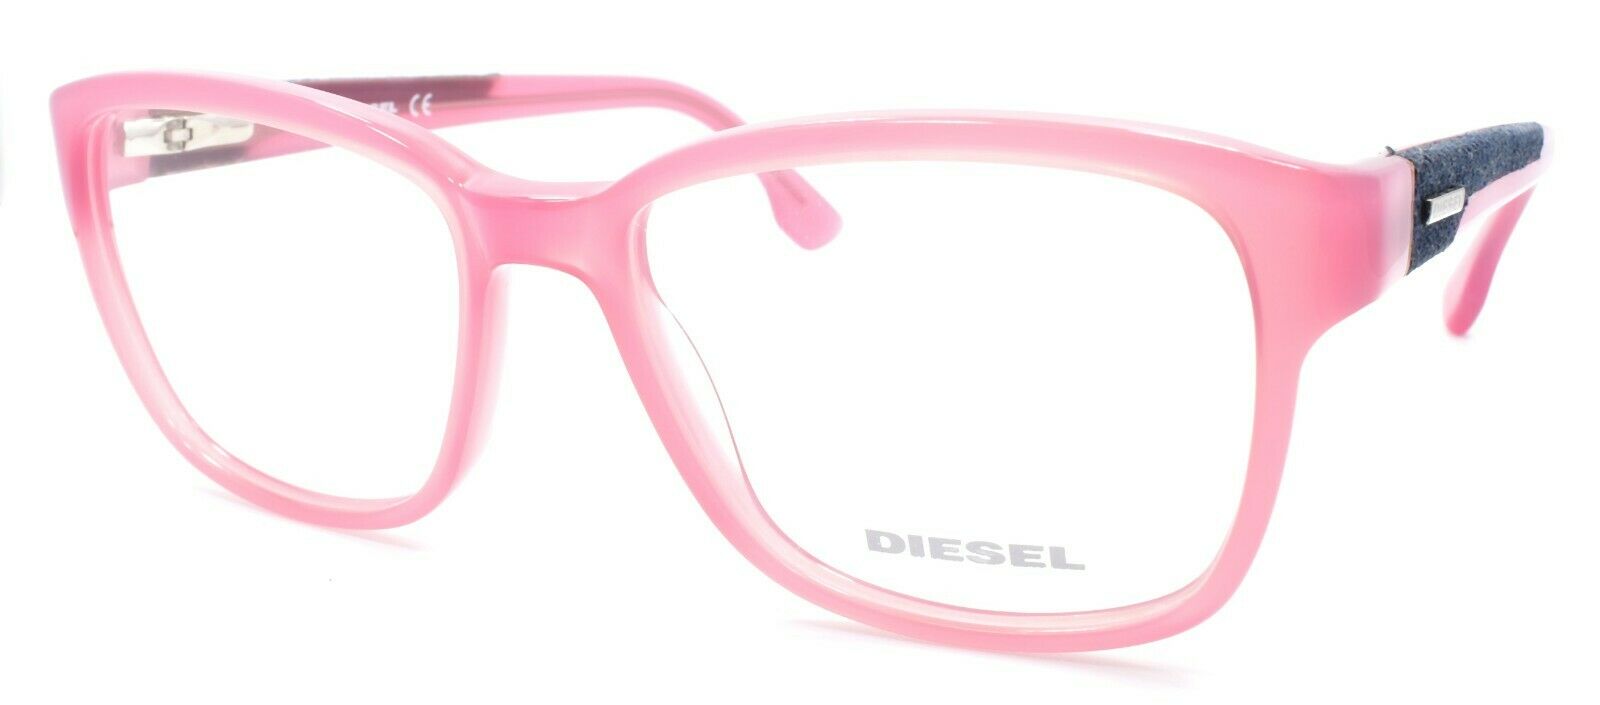 1-Diesel DL5032 081 Women's Eyeglasses Frames 51-16-140 Pink / Blue Denim-664689584451-IKSpecs